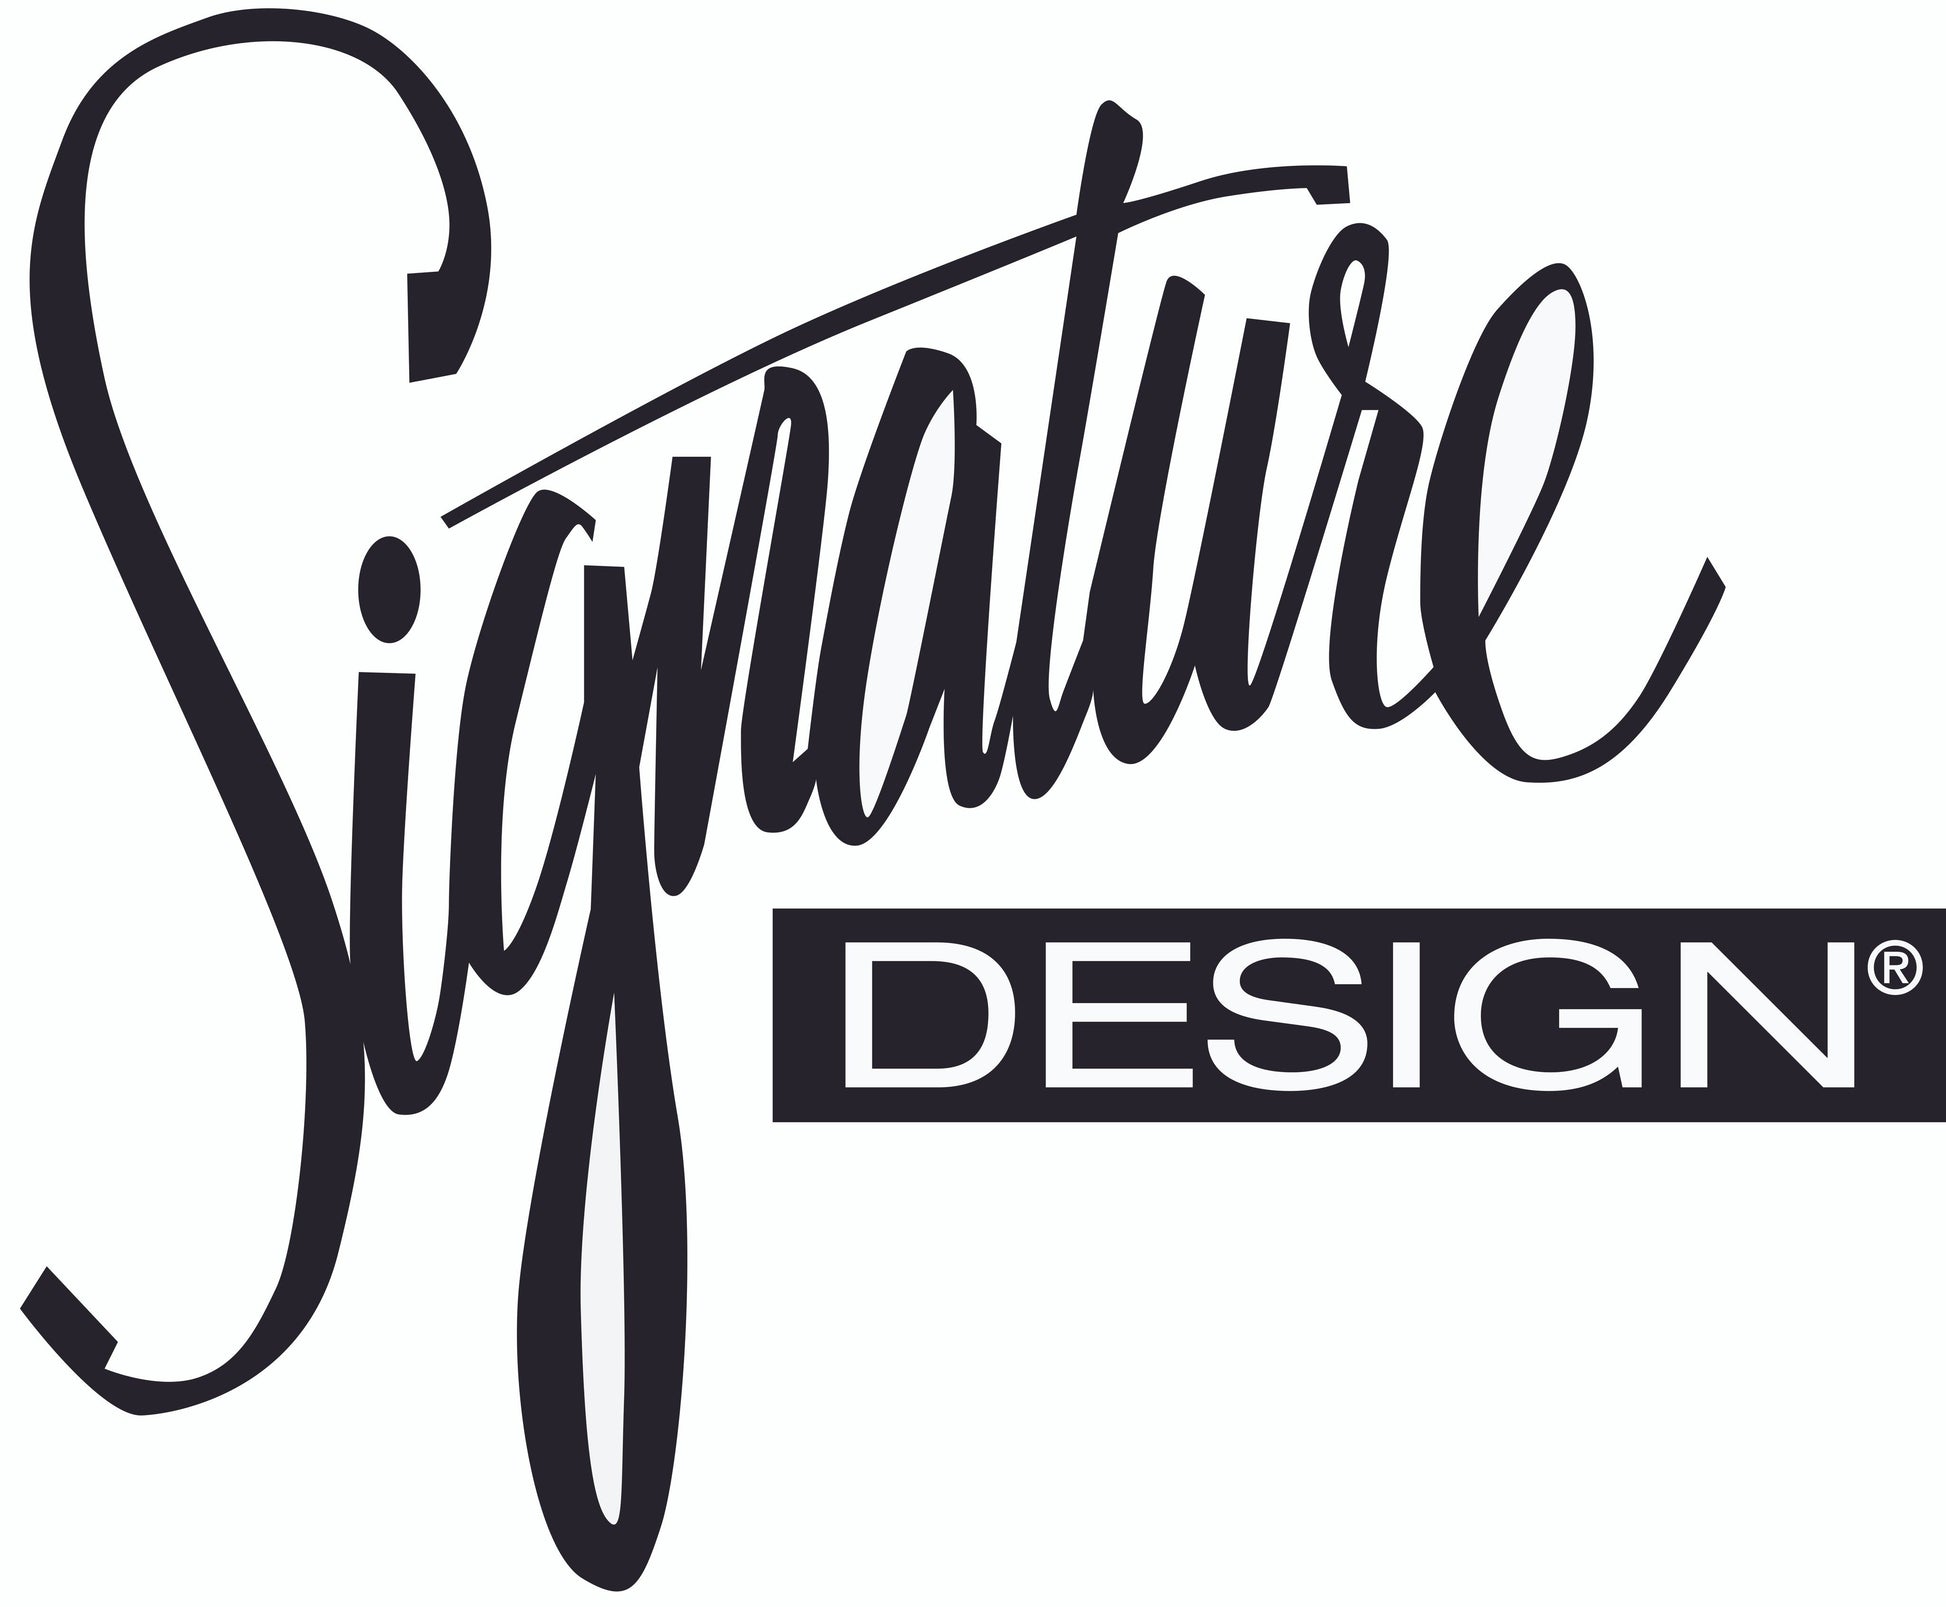 Krystanza Rectangular End Table Signature Design by Ashley®